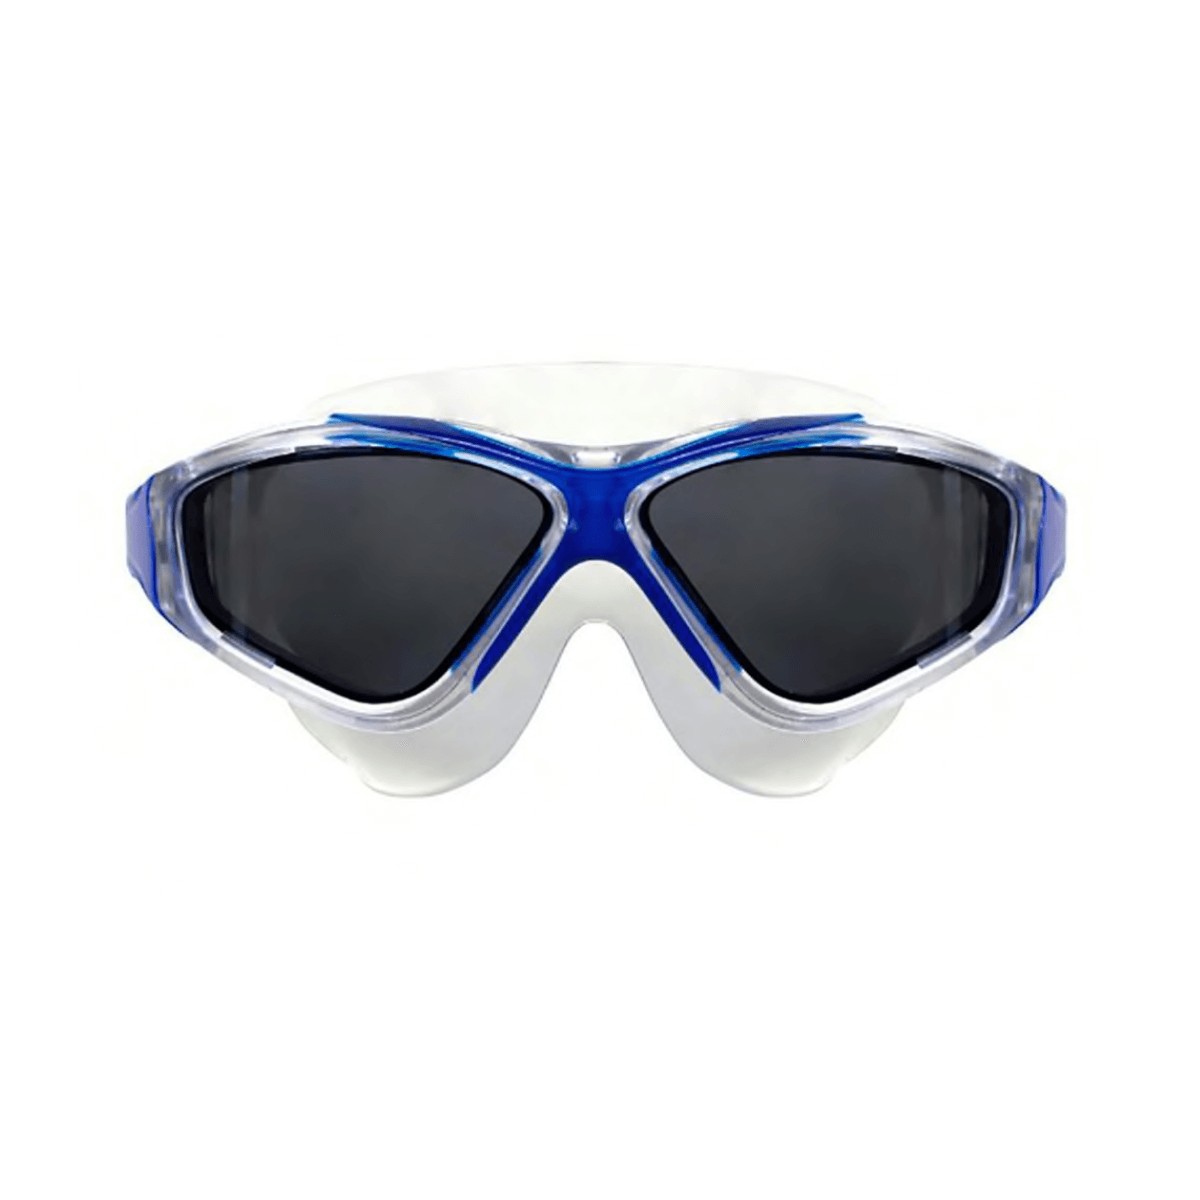 Gafas Zone3 Vision Max Azul Blanco